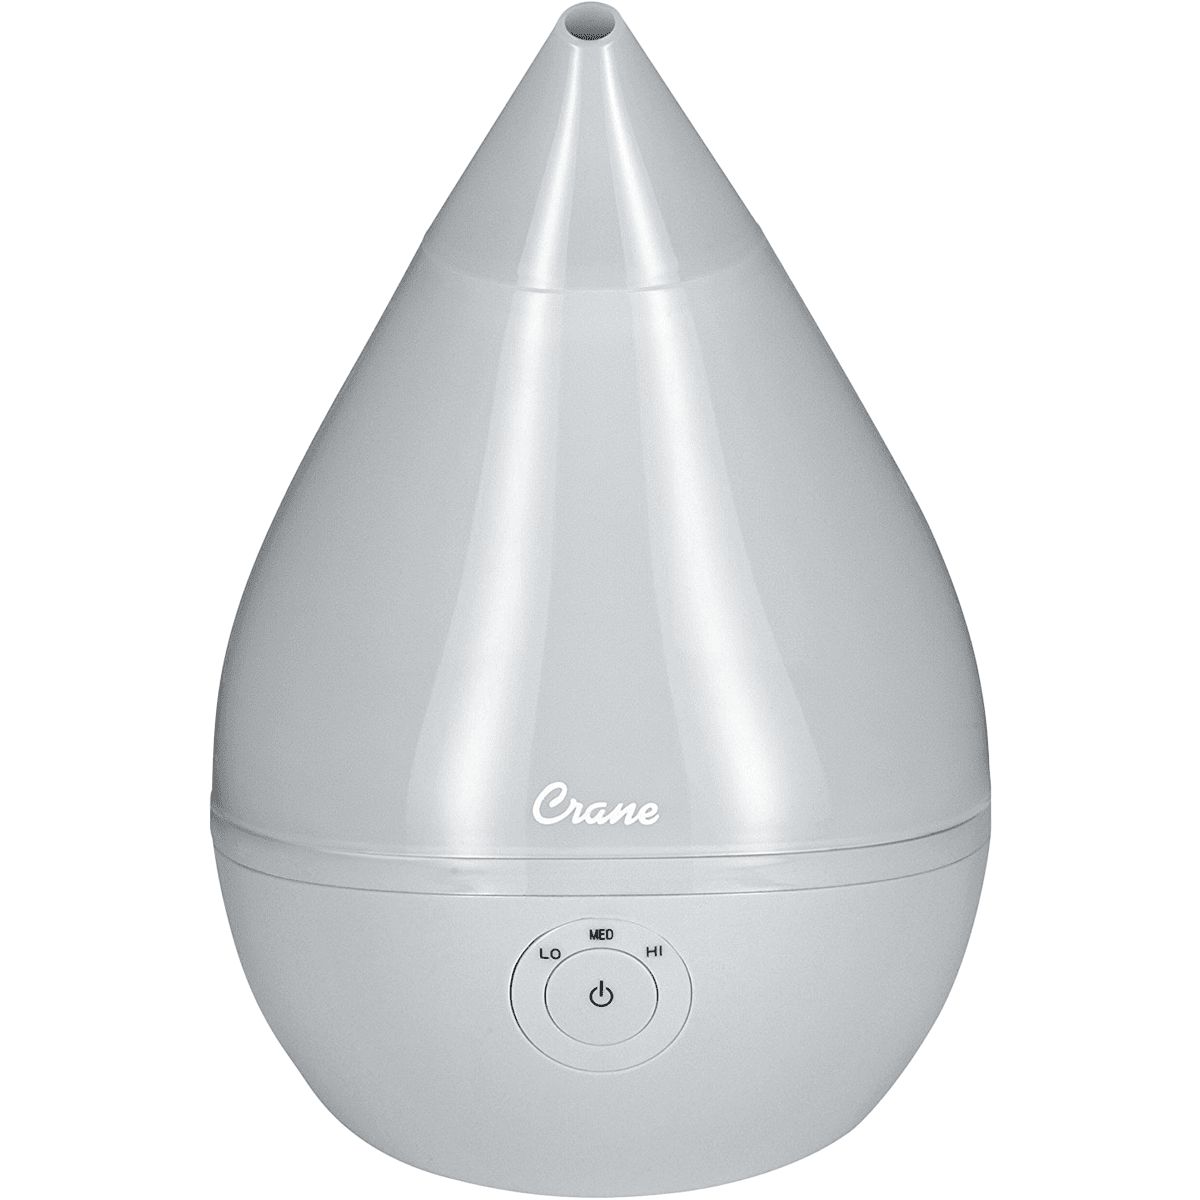 Crane Droplet Cool Mist Humidifier - Slate